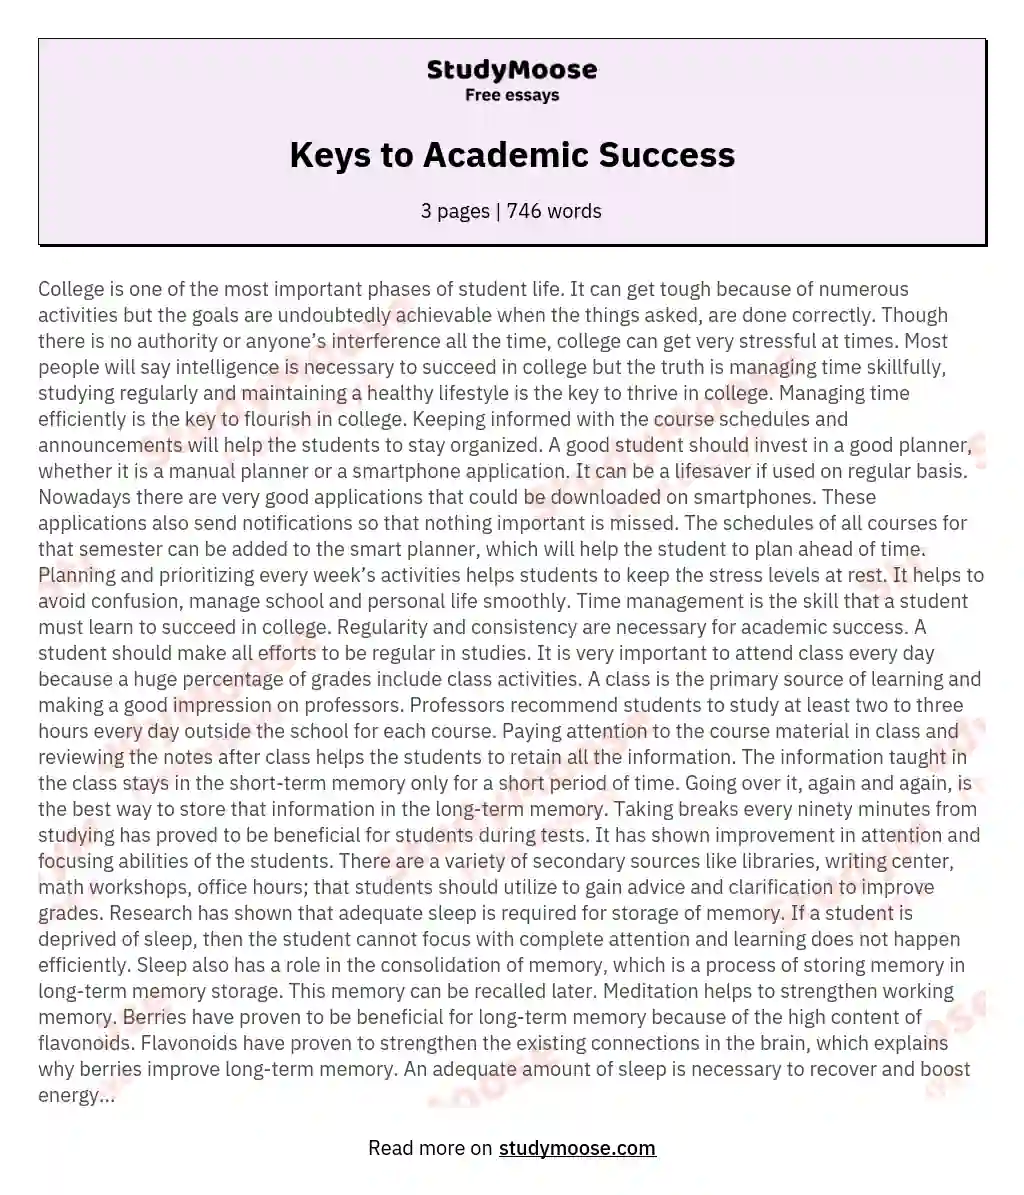 Keys to Academic Success